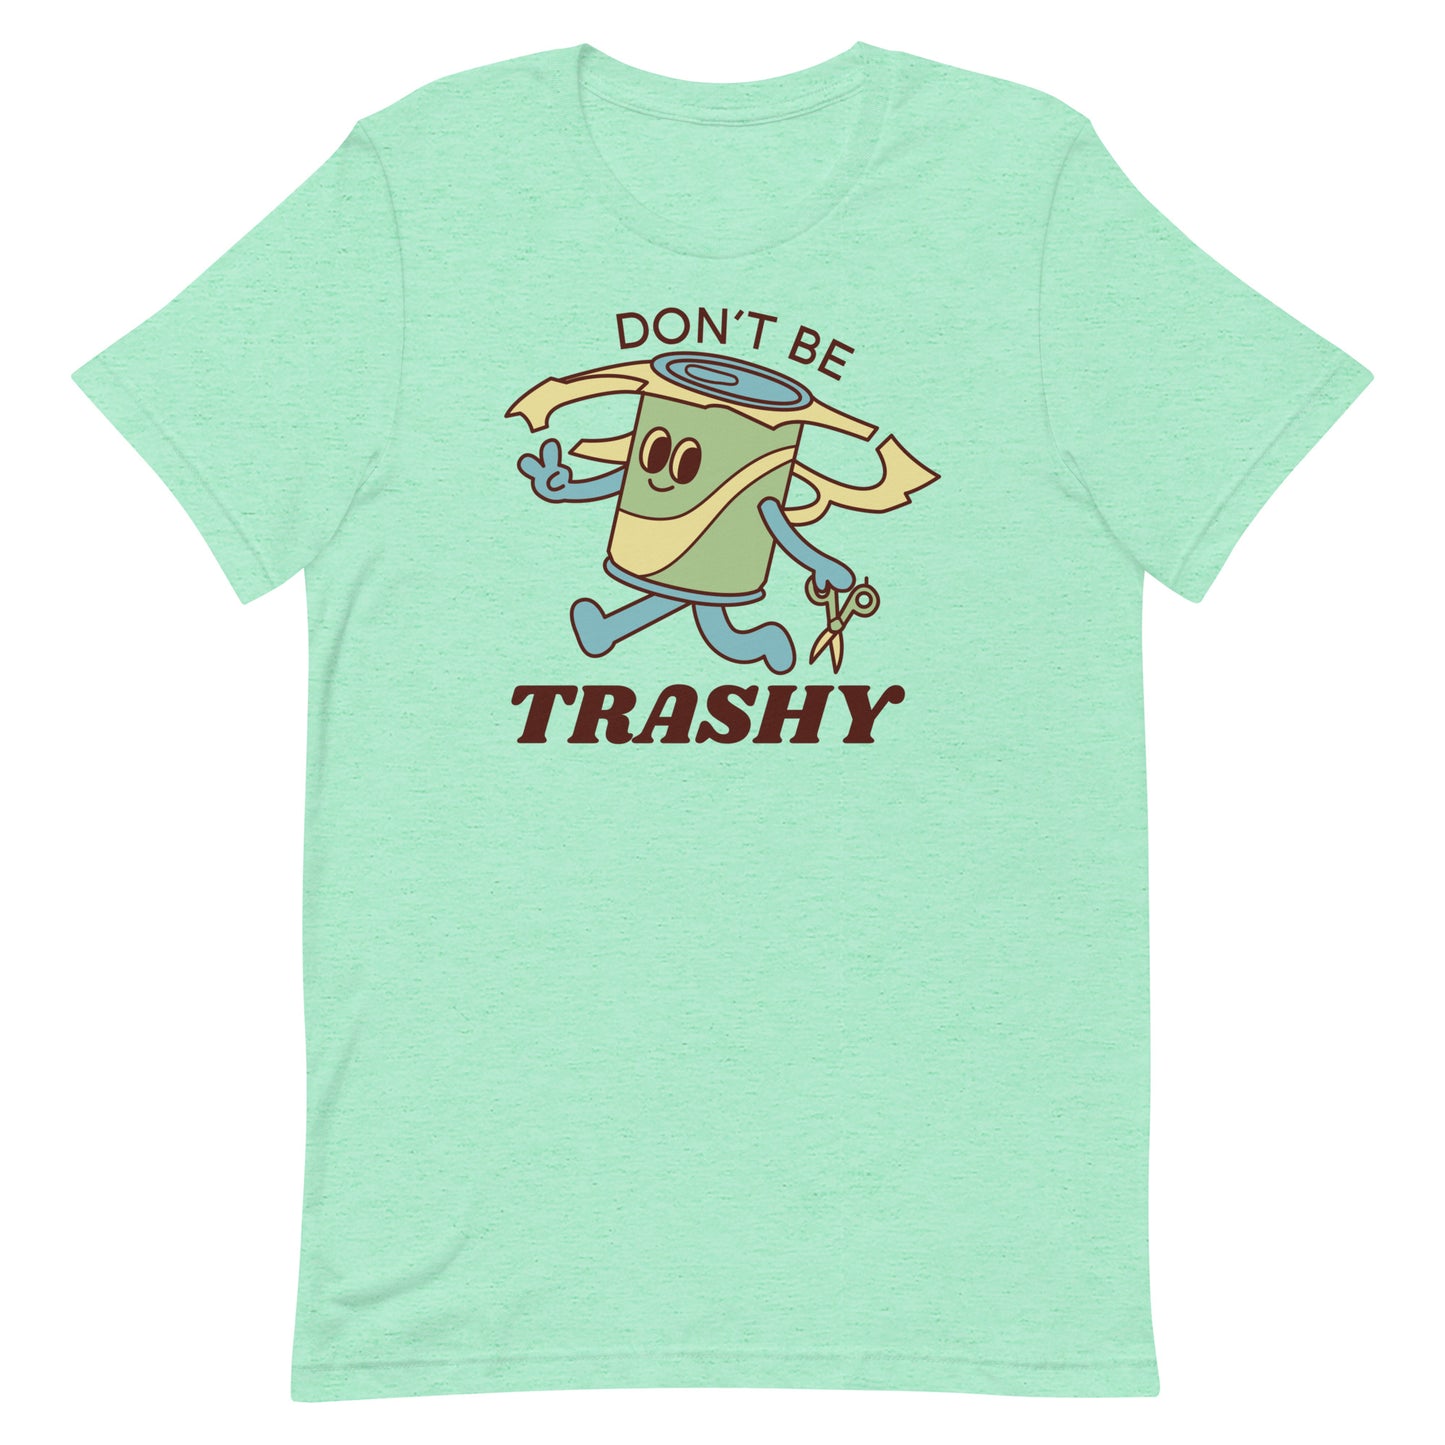 Don't Be Trashy Unisex t-shirt